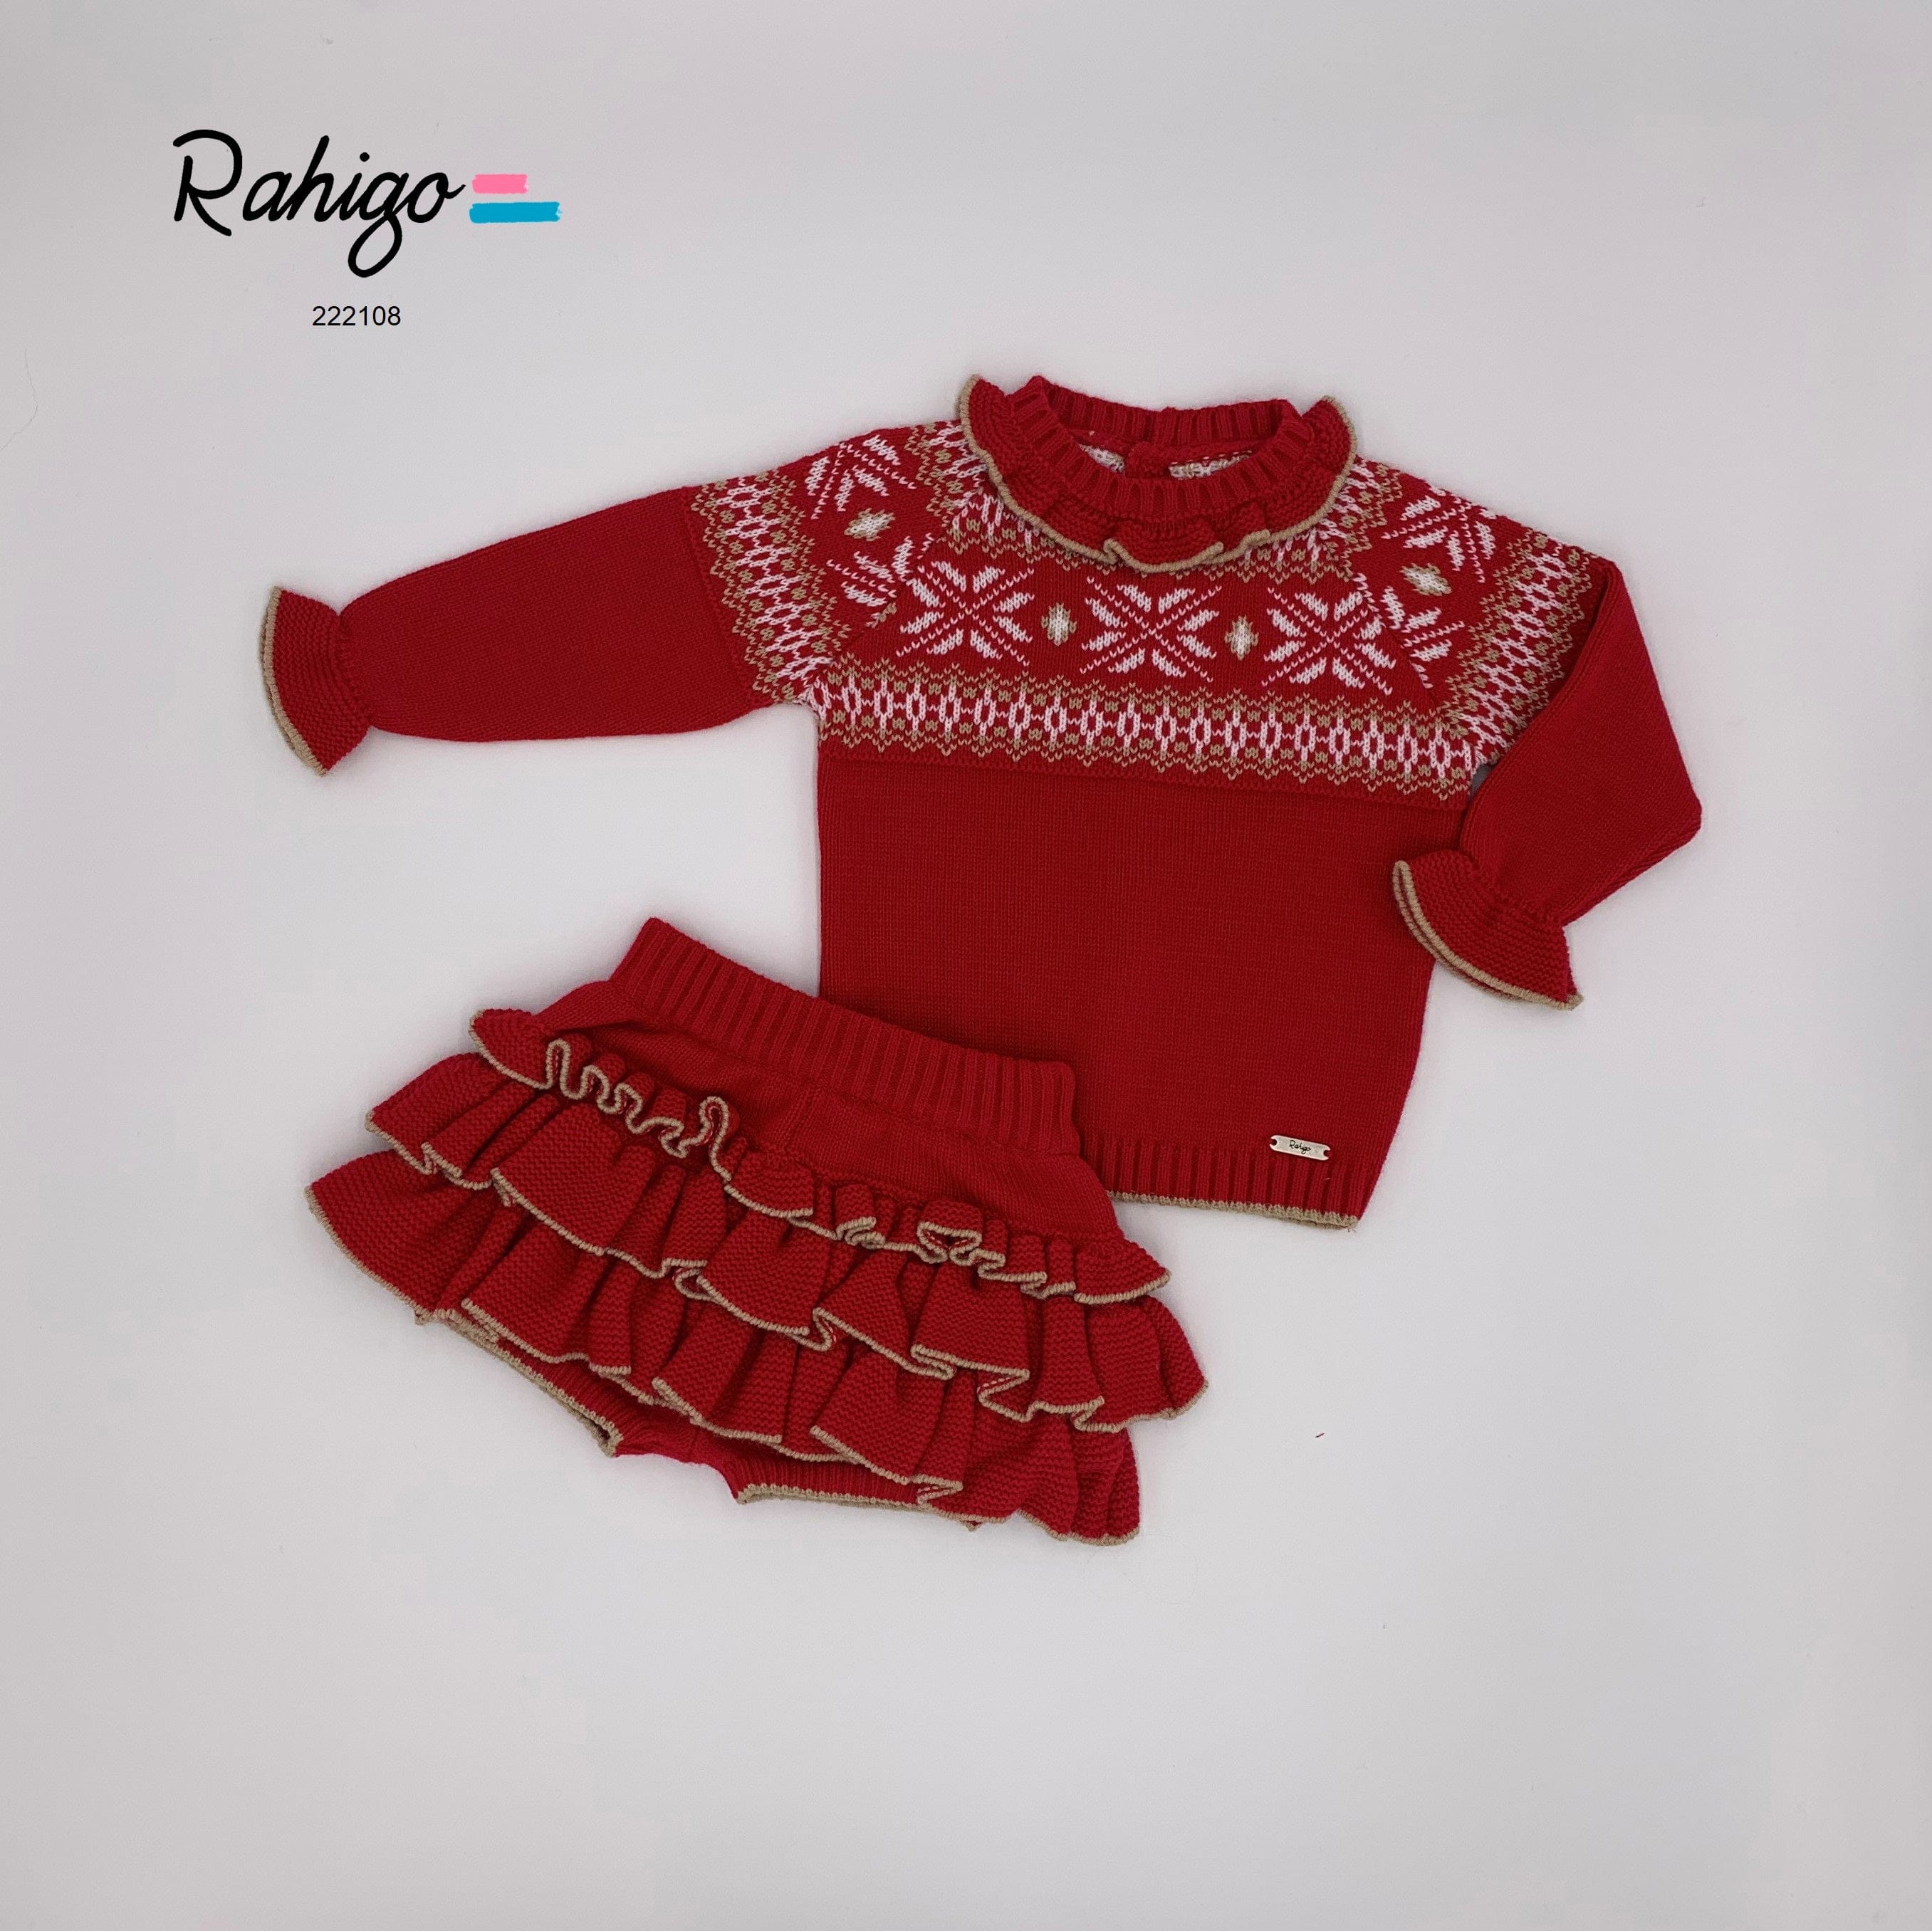 Rahigo - Four Piece Fairisle Skirt Set With Camel -  Navy